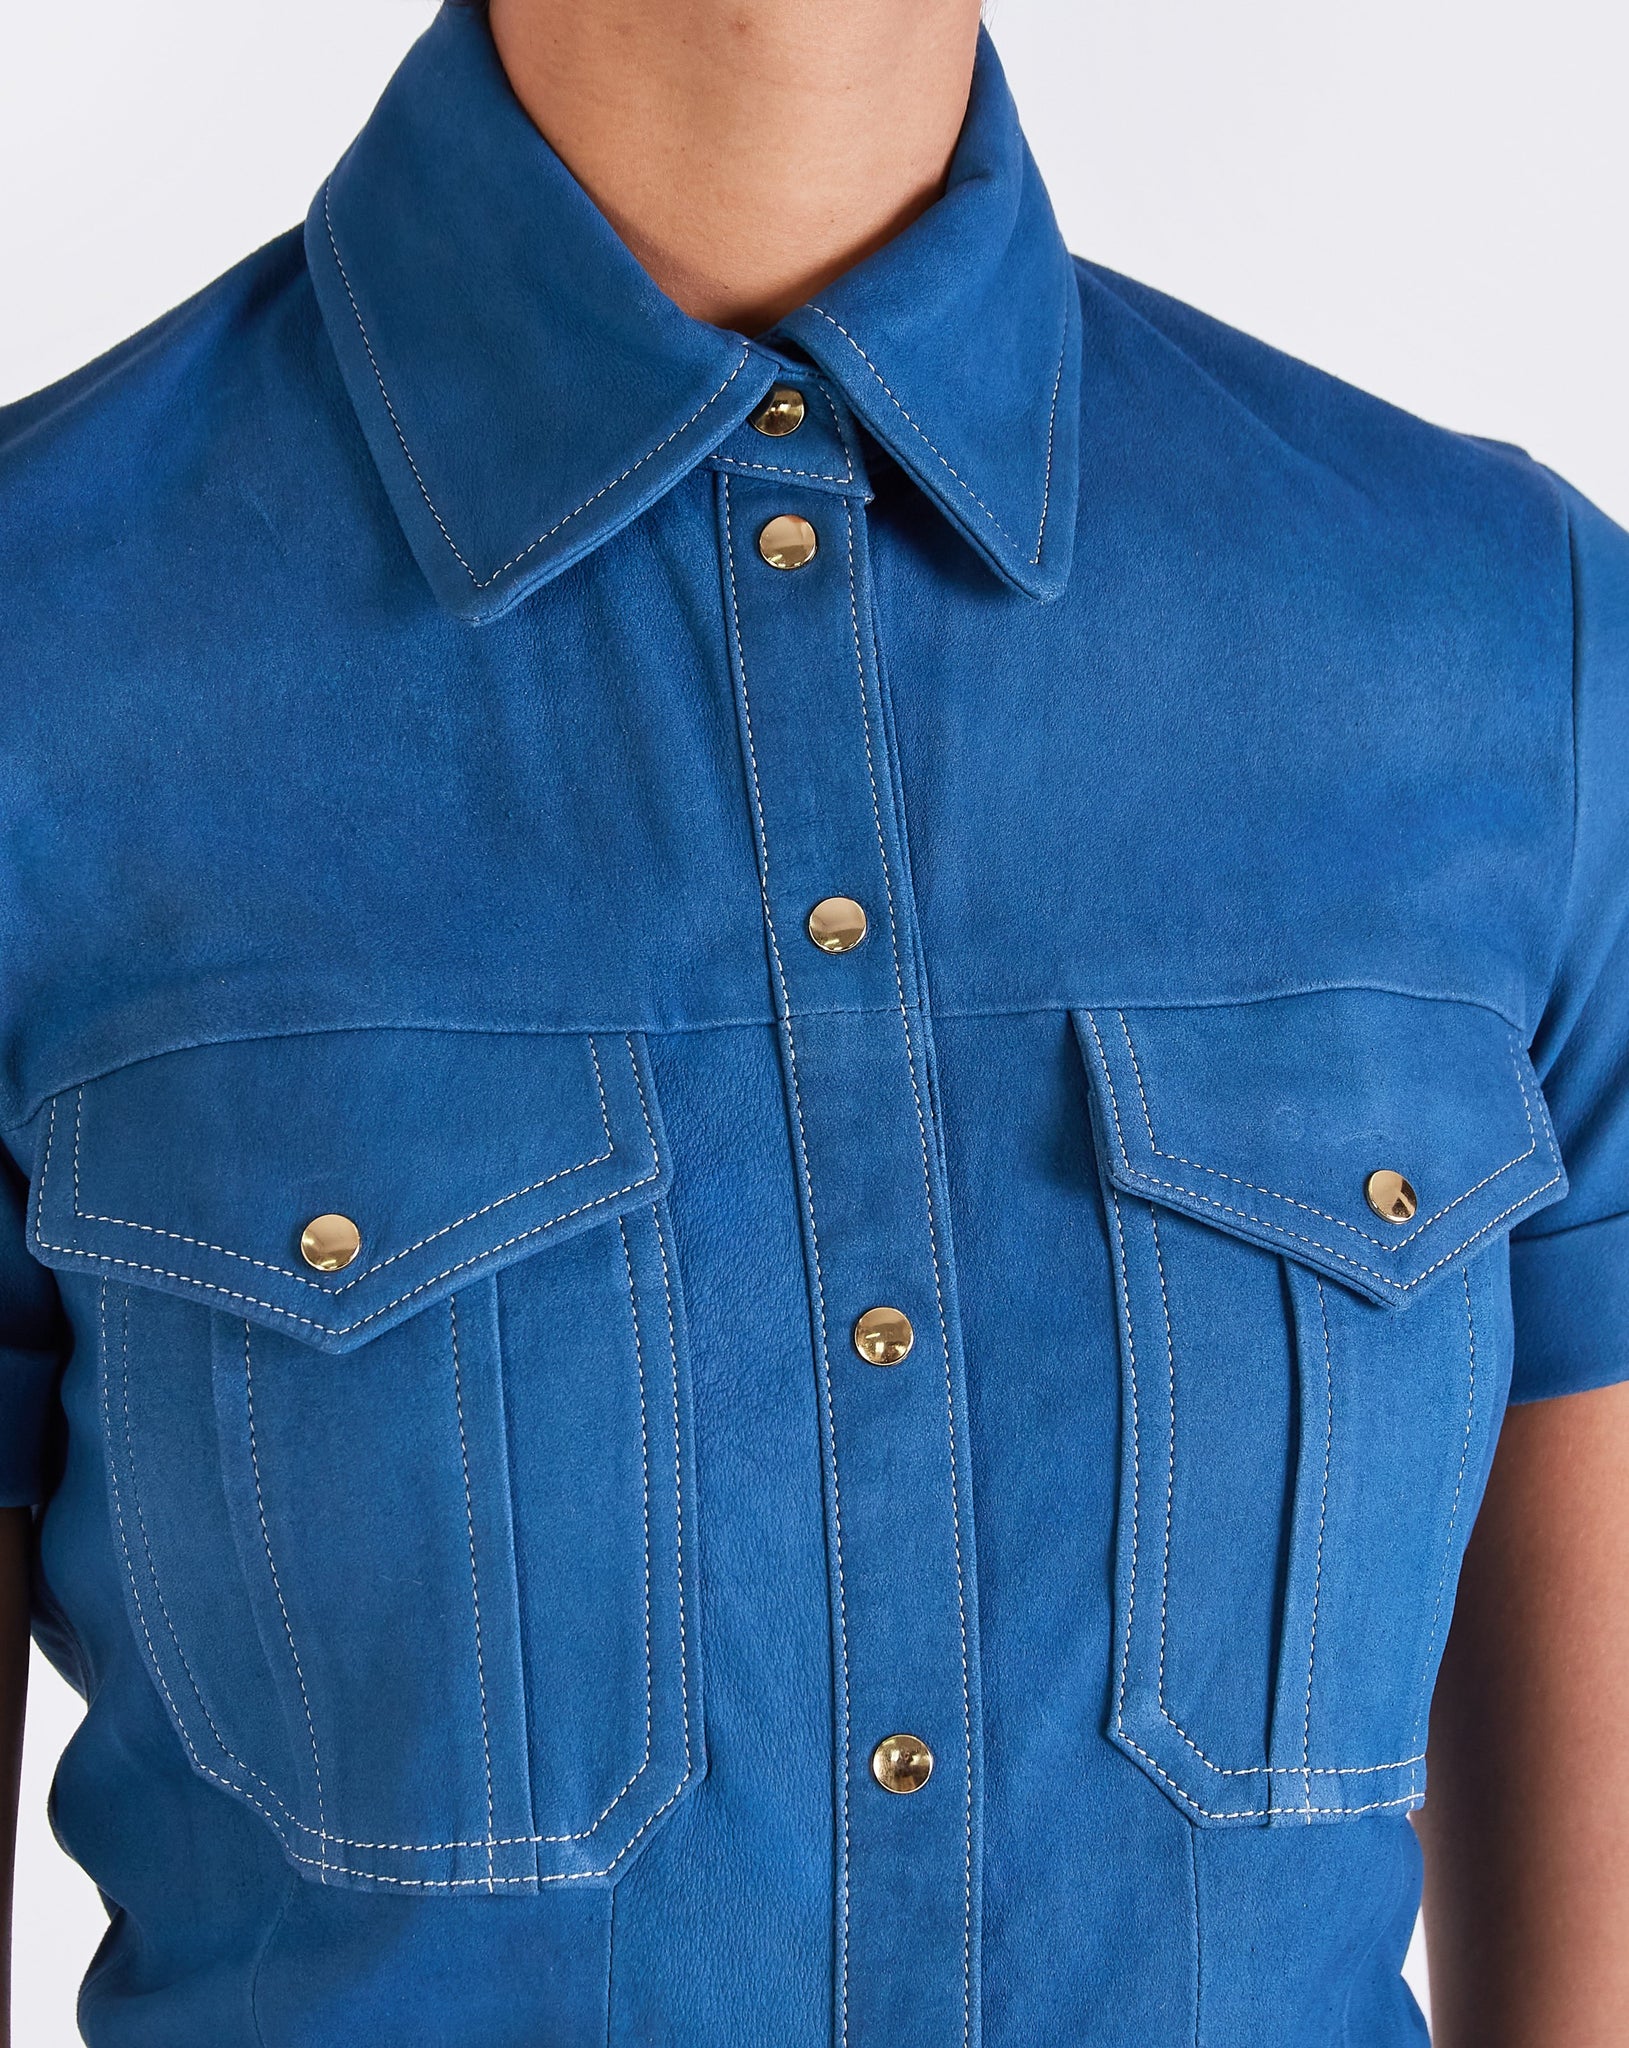 Celine LEATHER SHIRT DRESS - WORKER BLUE